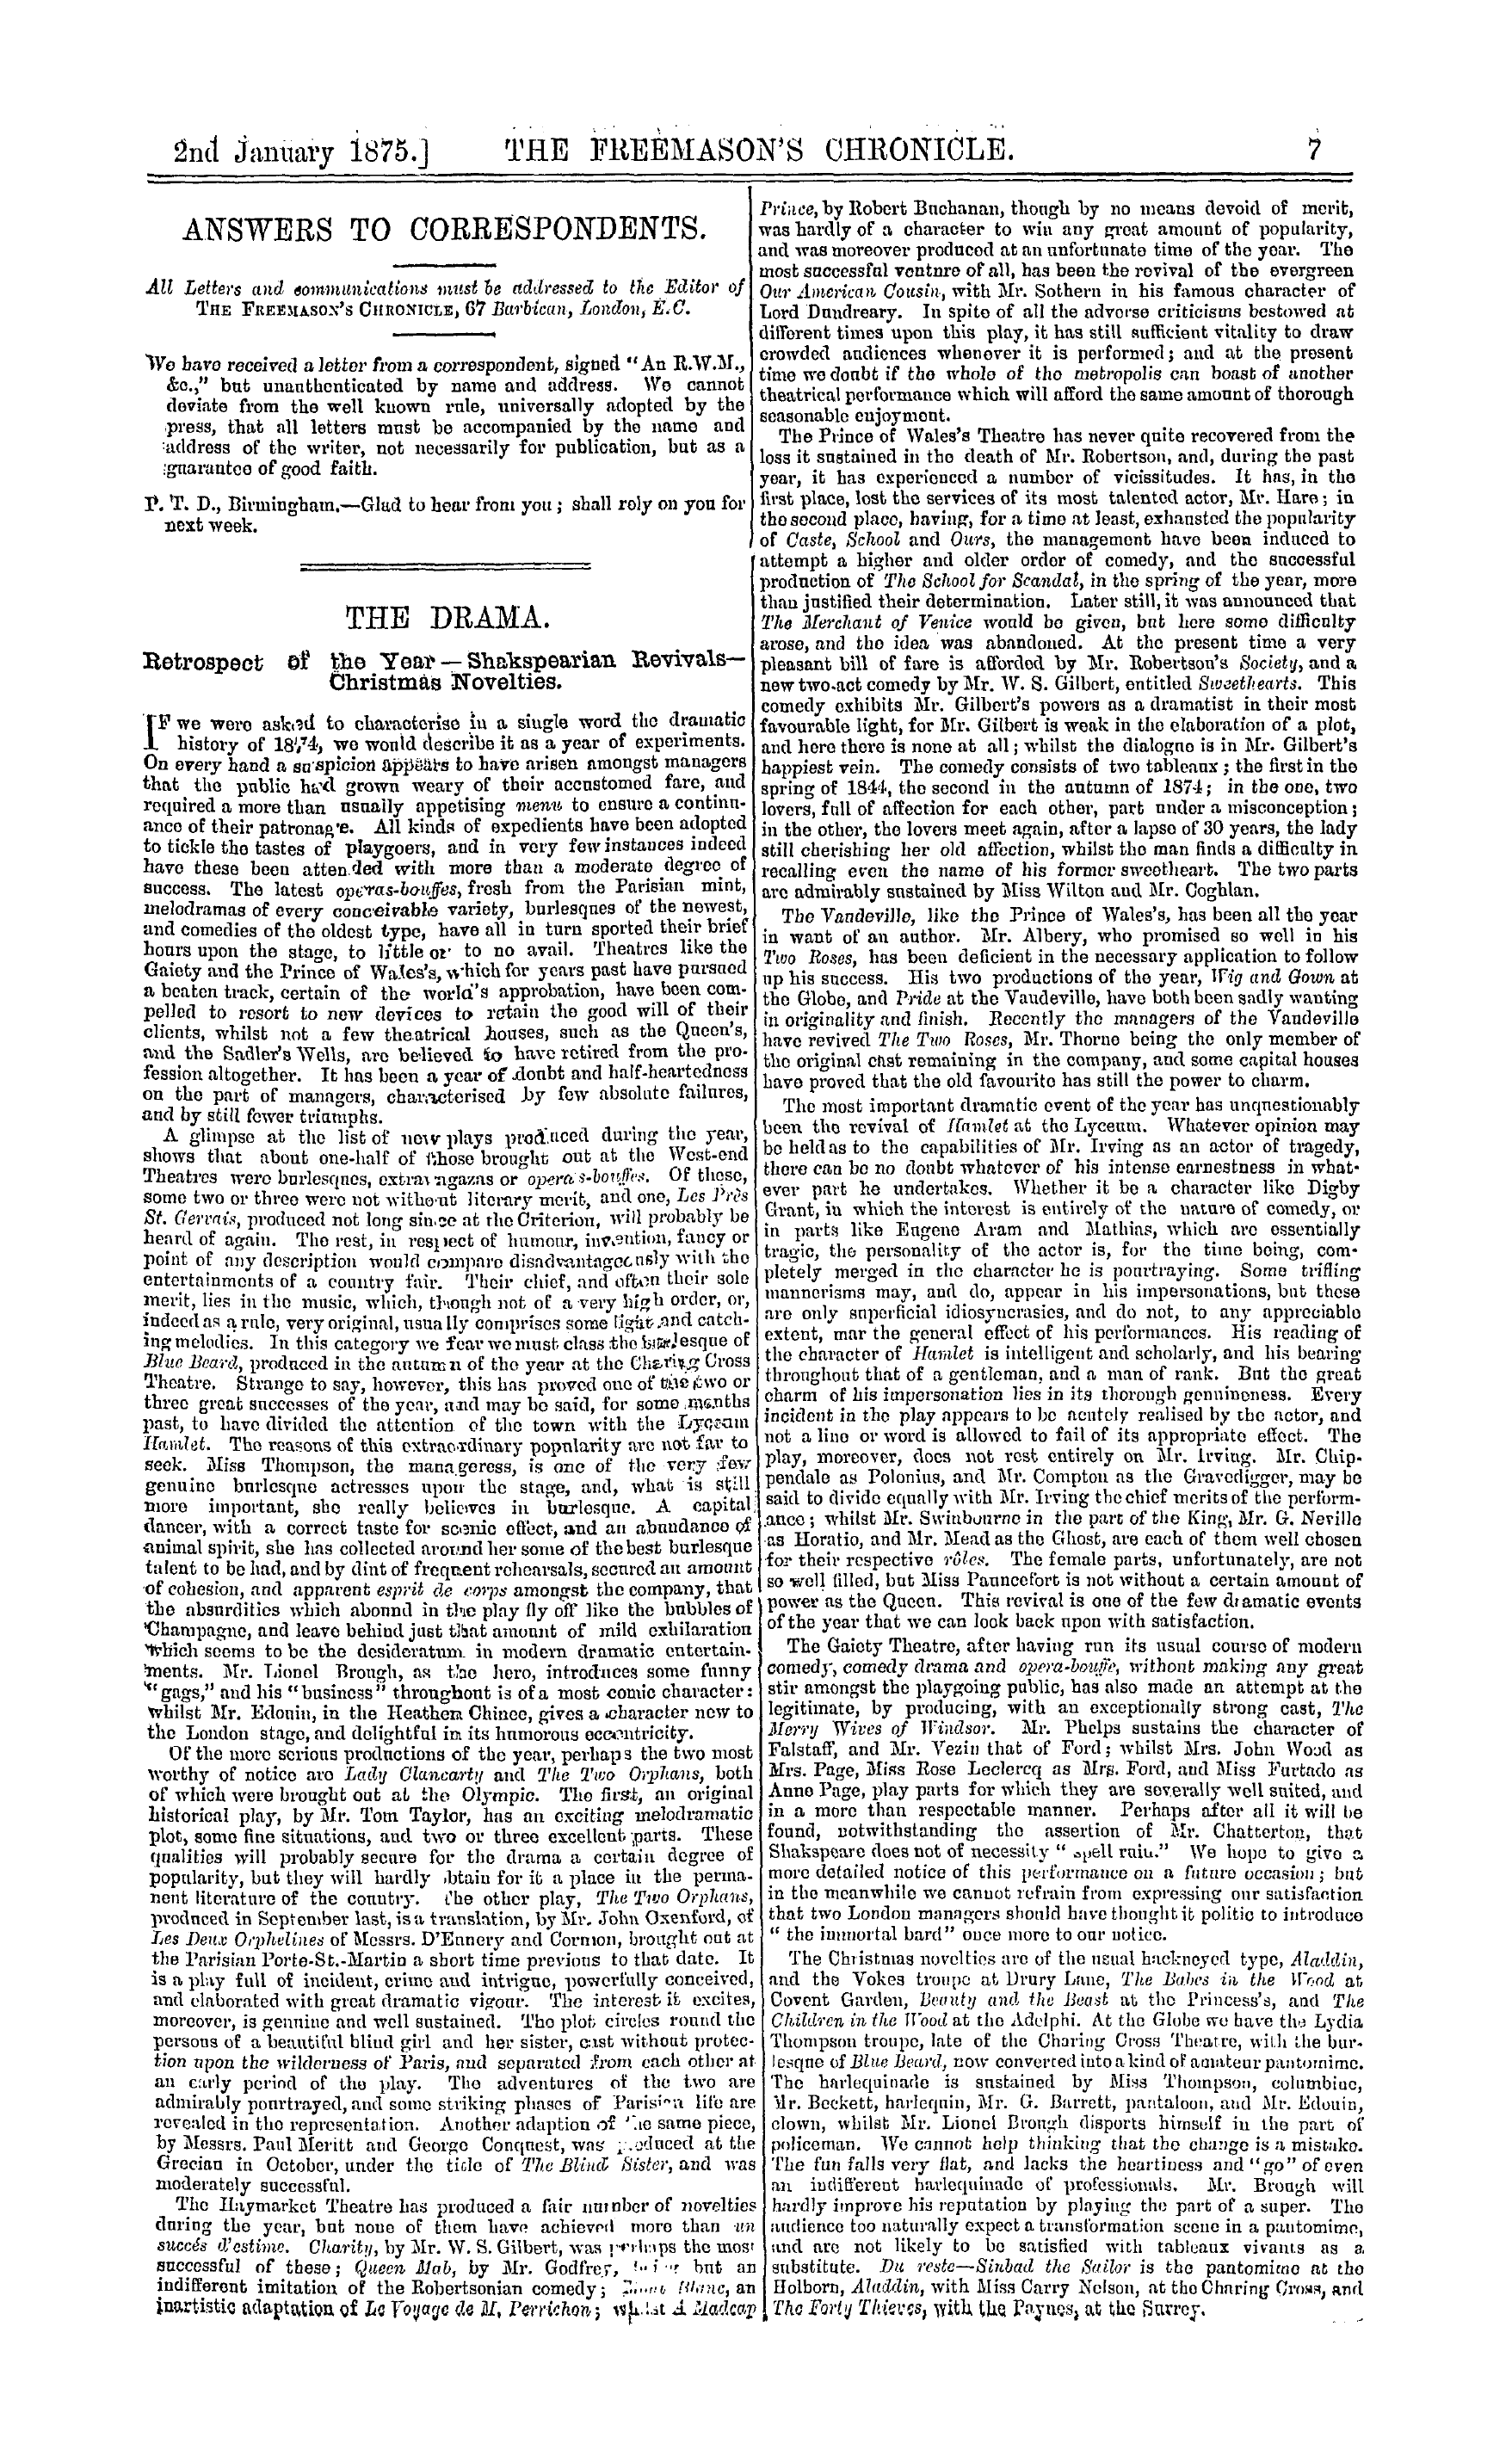 The Freemason's Chronicle: 1875-01-02 - Answers To Correspondents.